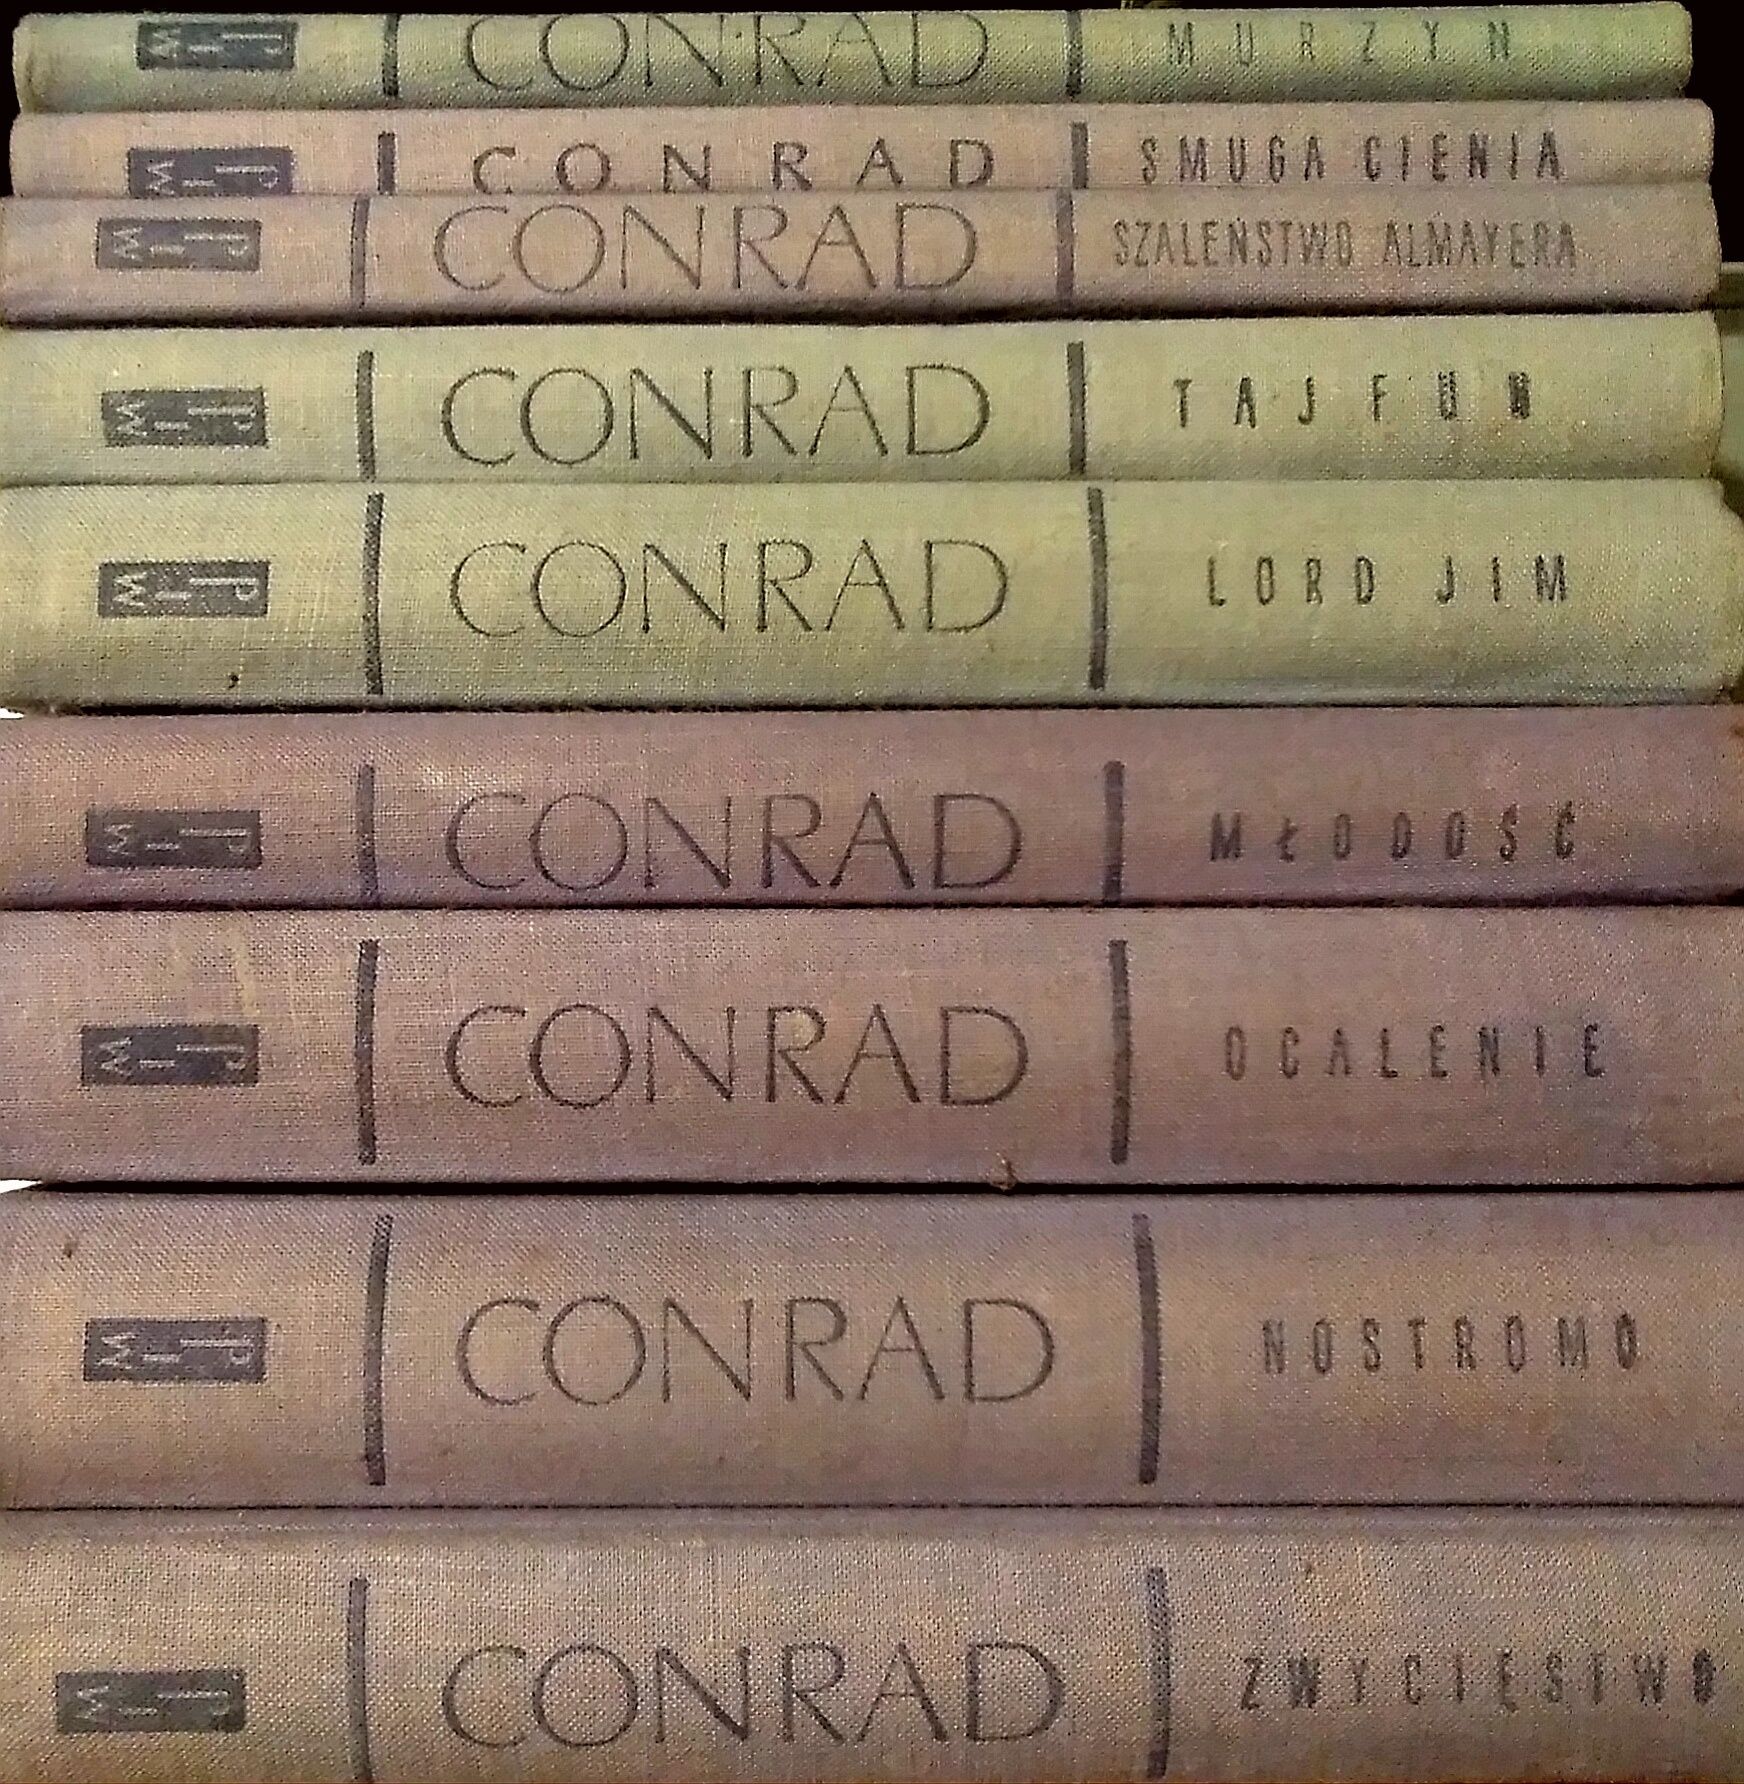 Joseph Conrad, 9 powieści, Smuga cienia, Tajfun, Lord Jim + 6 pozycji